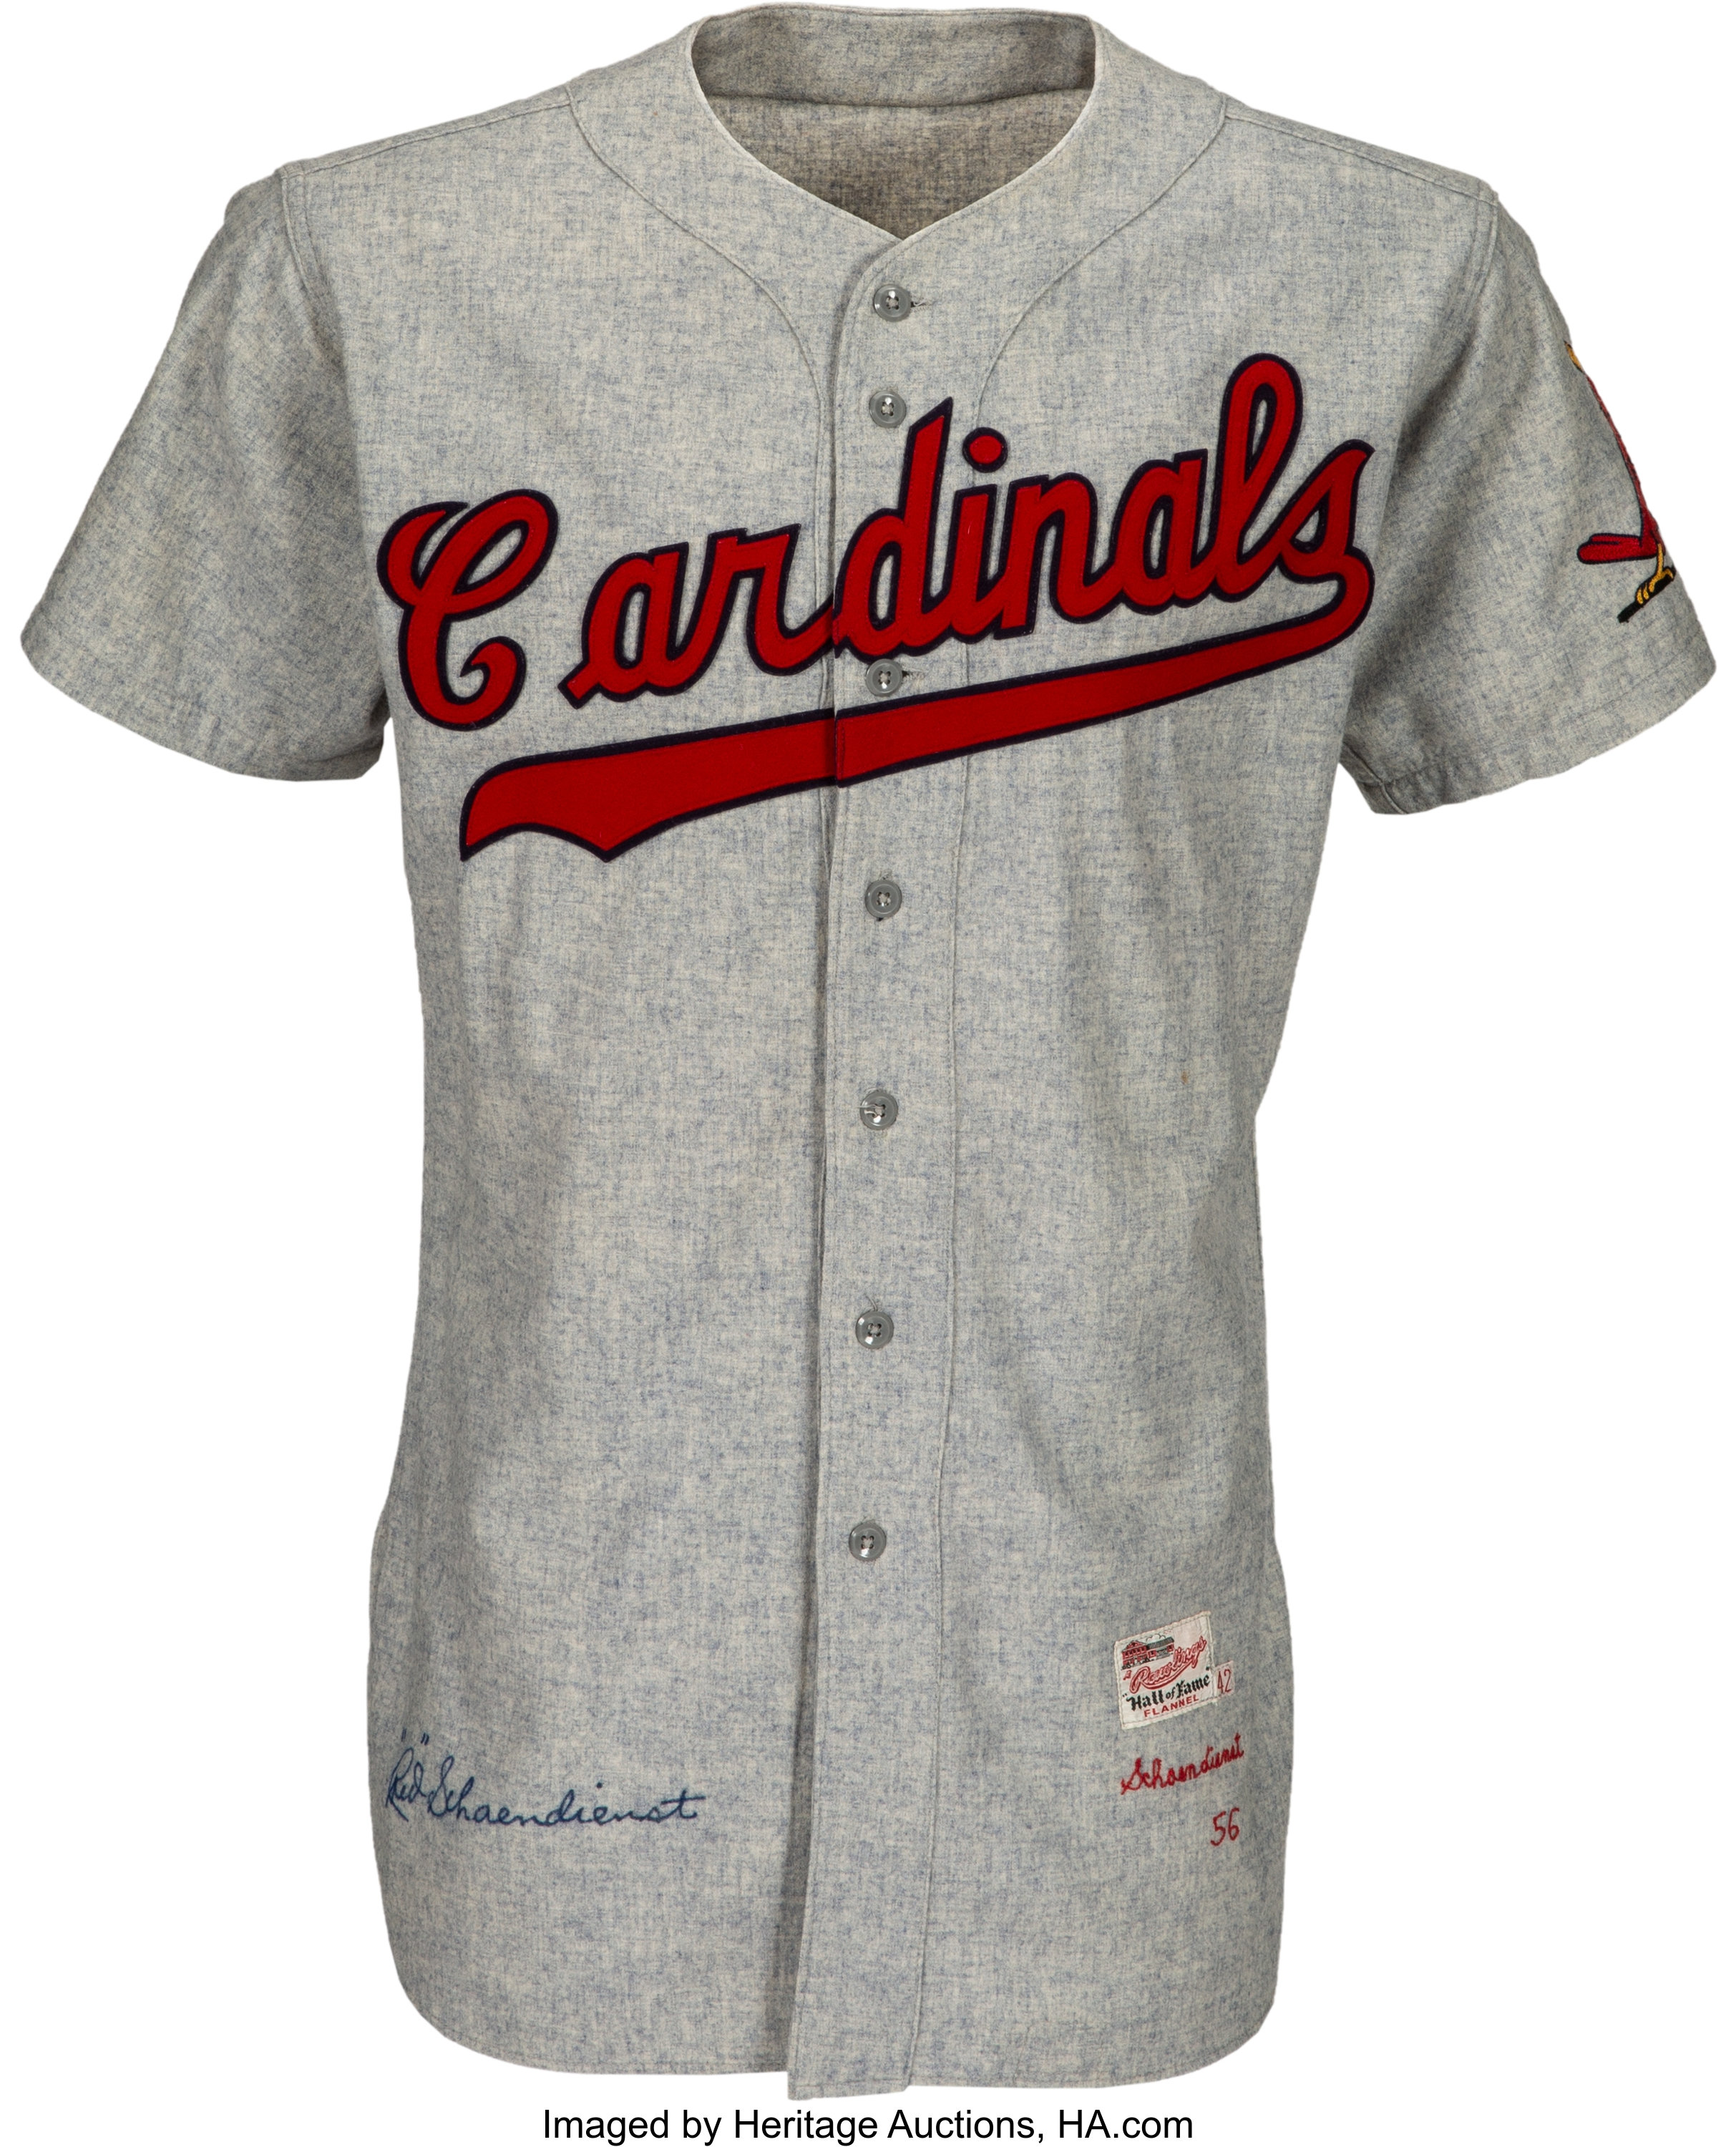 Cardinals-1932-Jersey  St louis cardinals, Jersey, Team jersey